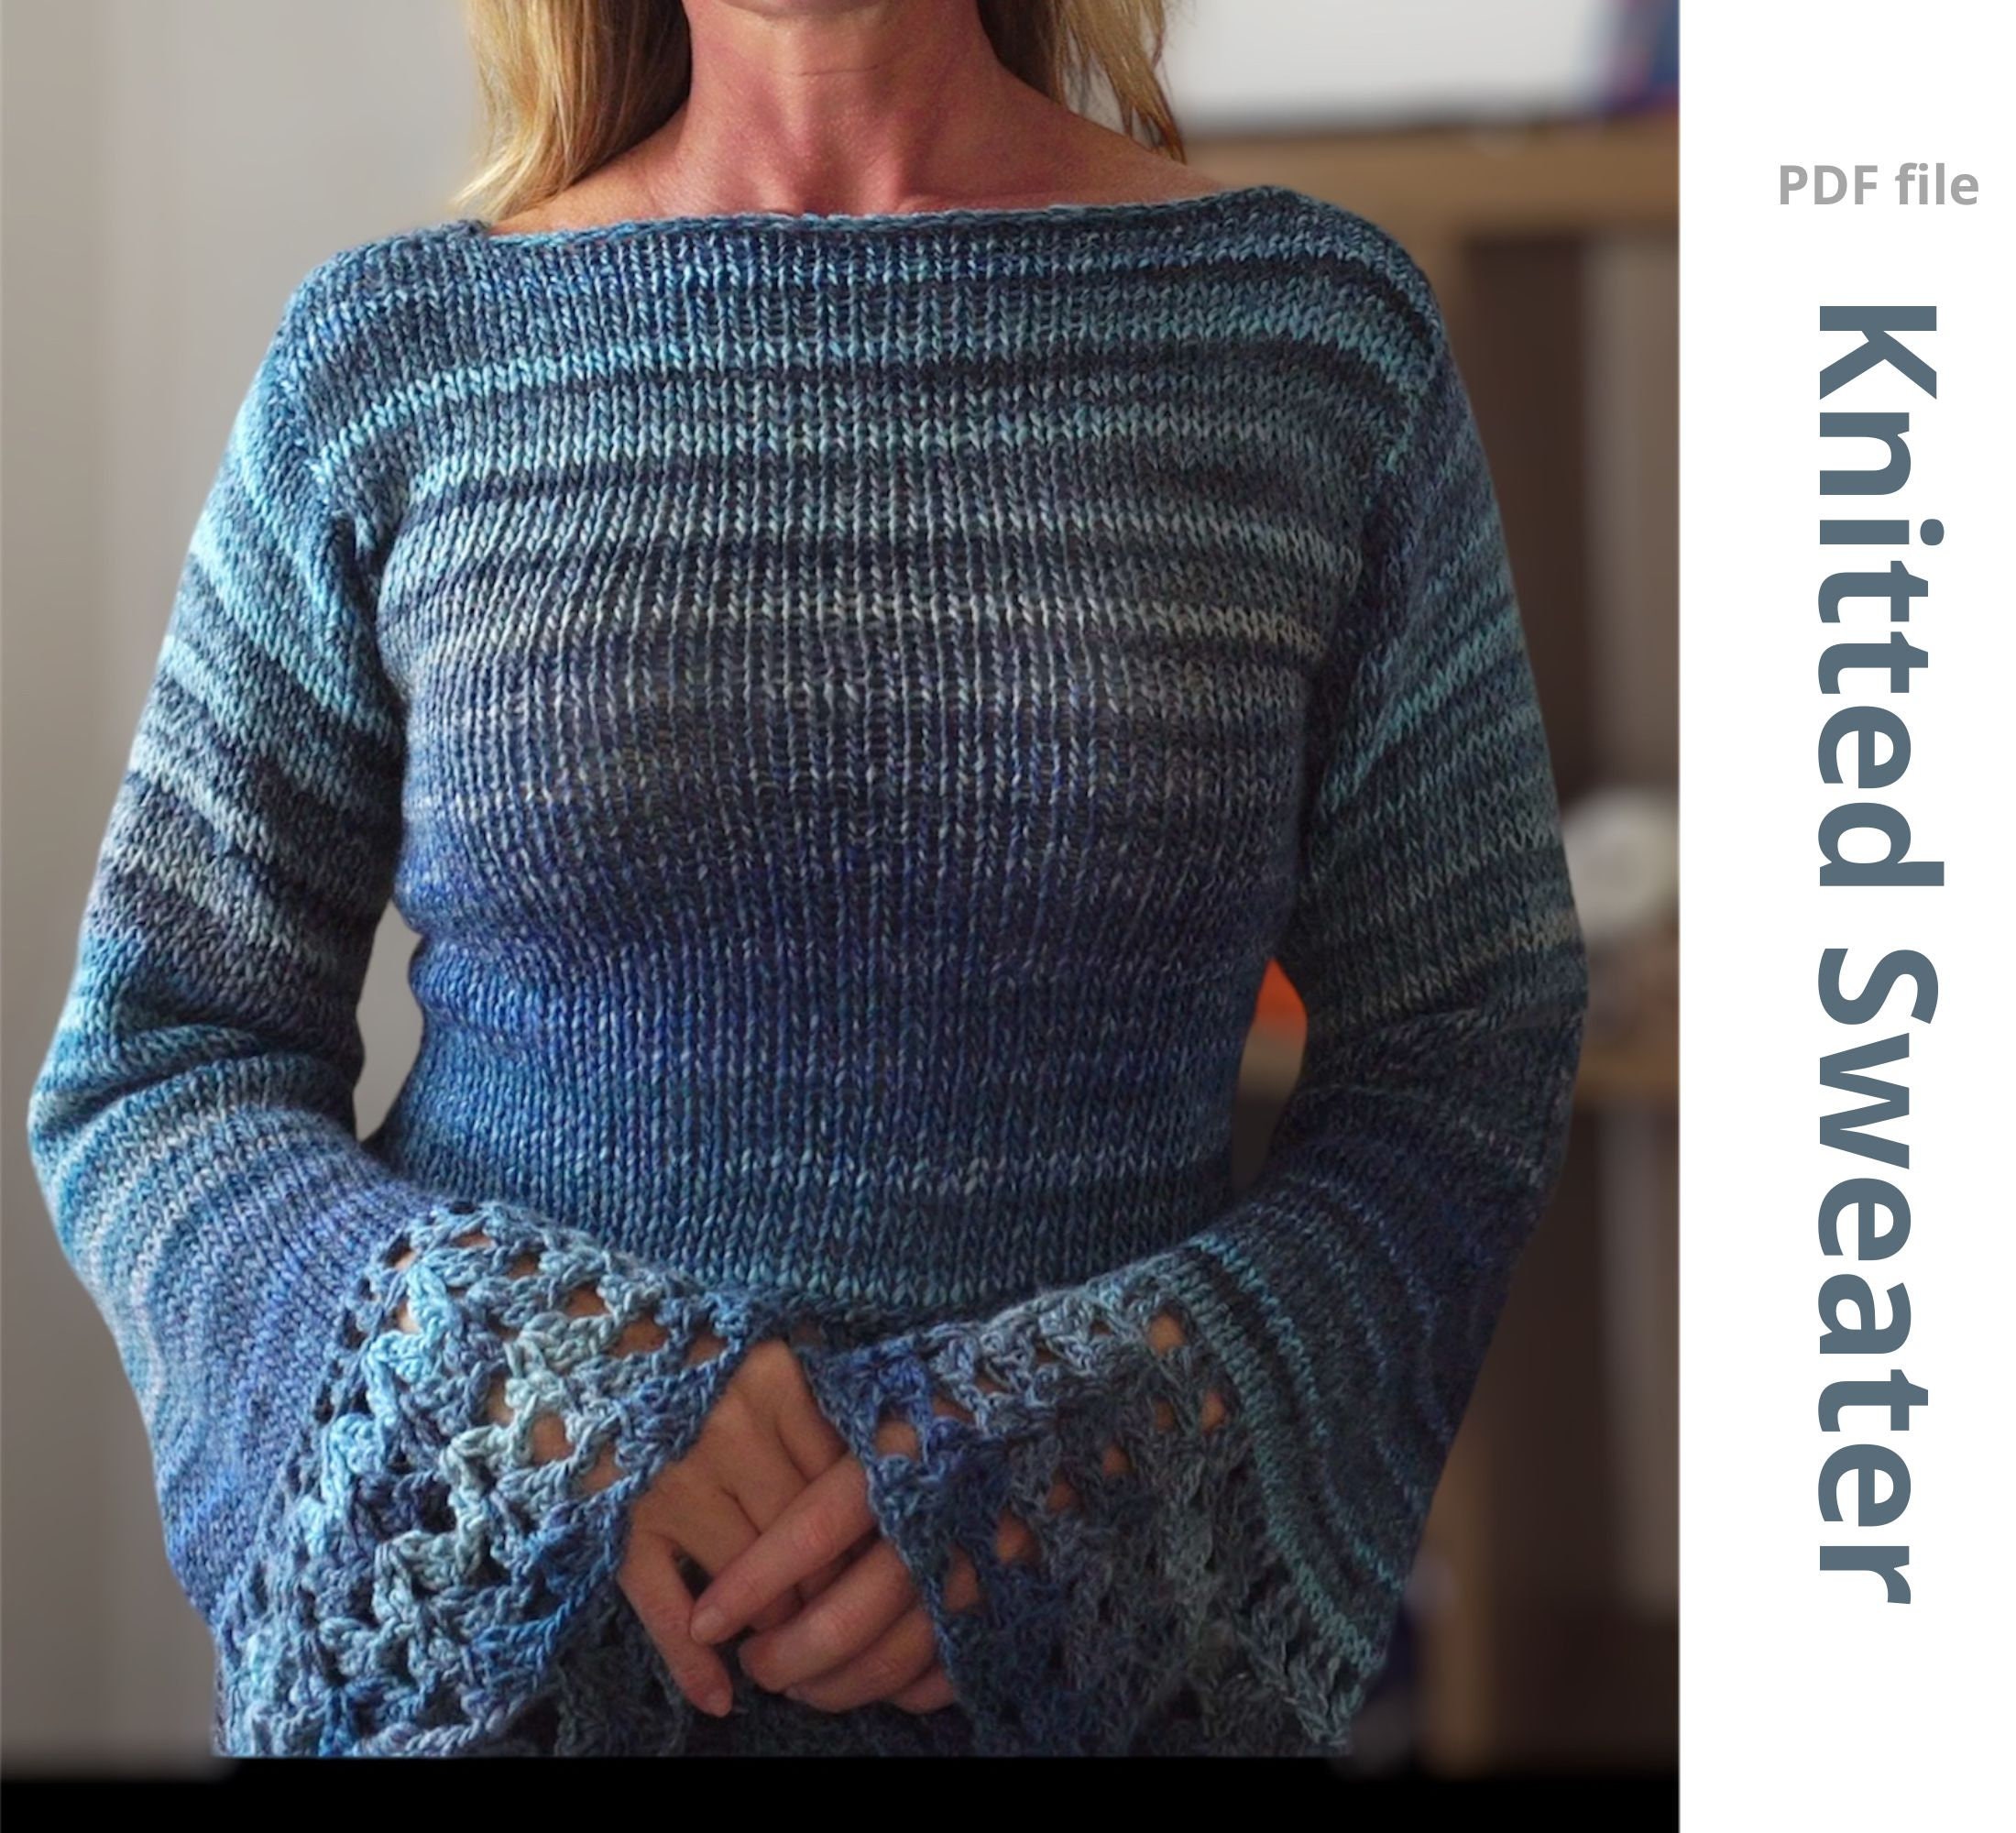 Knitting machine sweater for beginners SENTRO or ADDI knitting